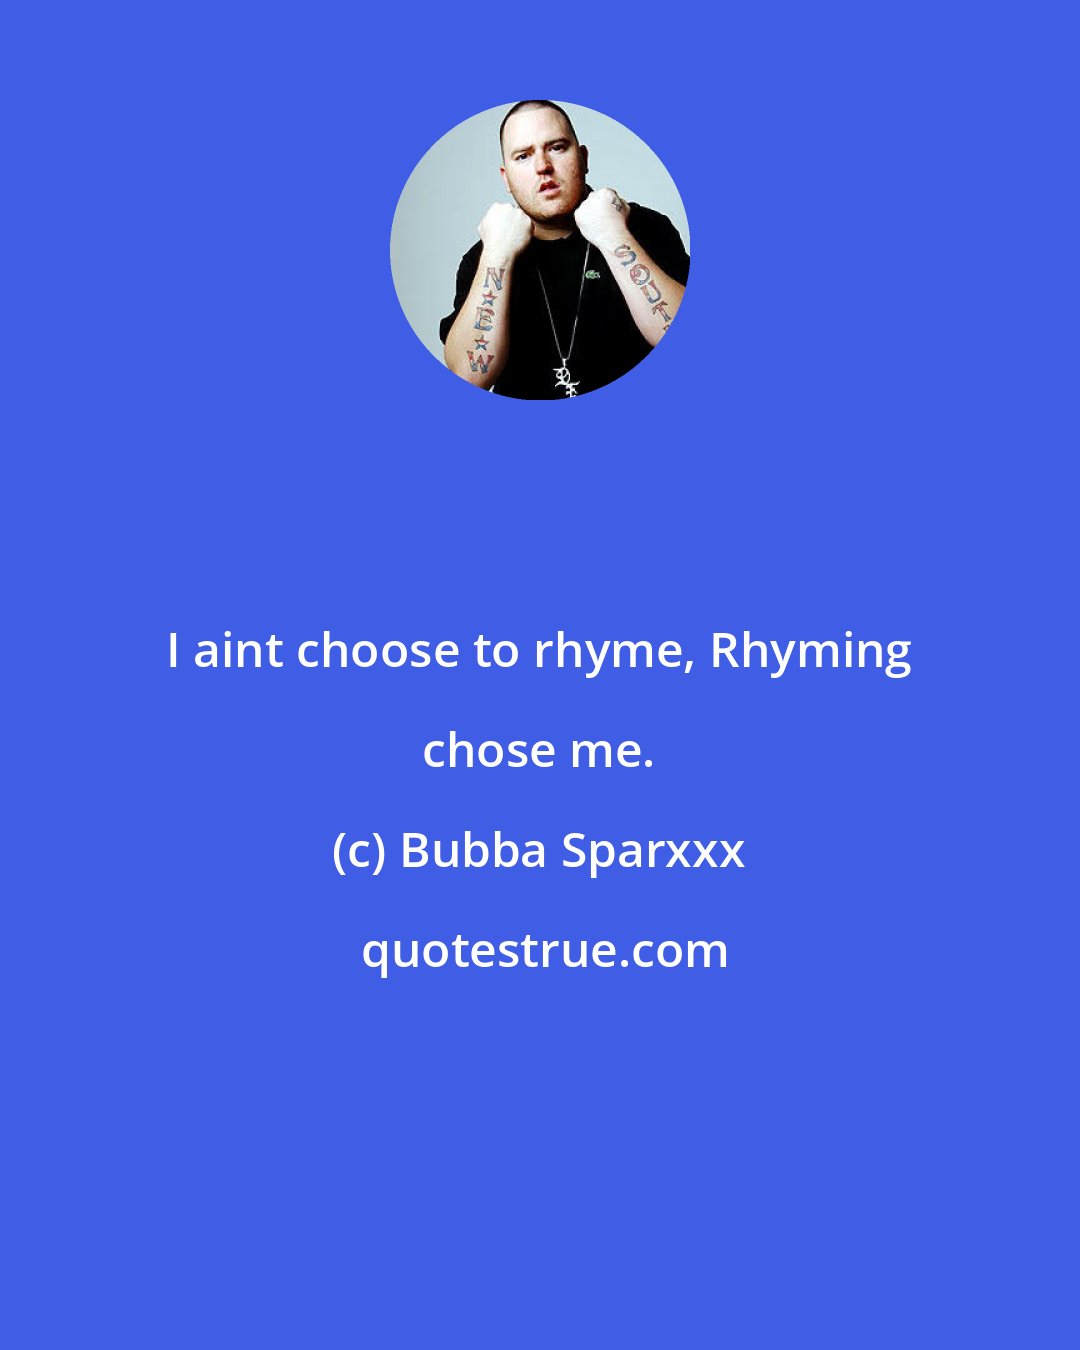 Bubba Sparxxx: I aint choose to rhyme, Rhyming chose me.